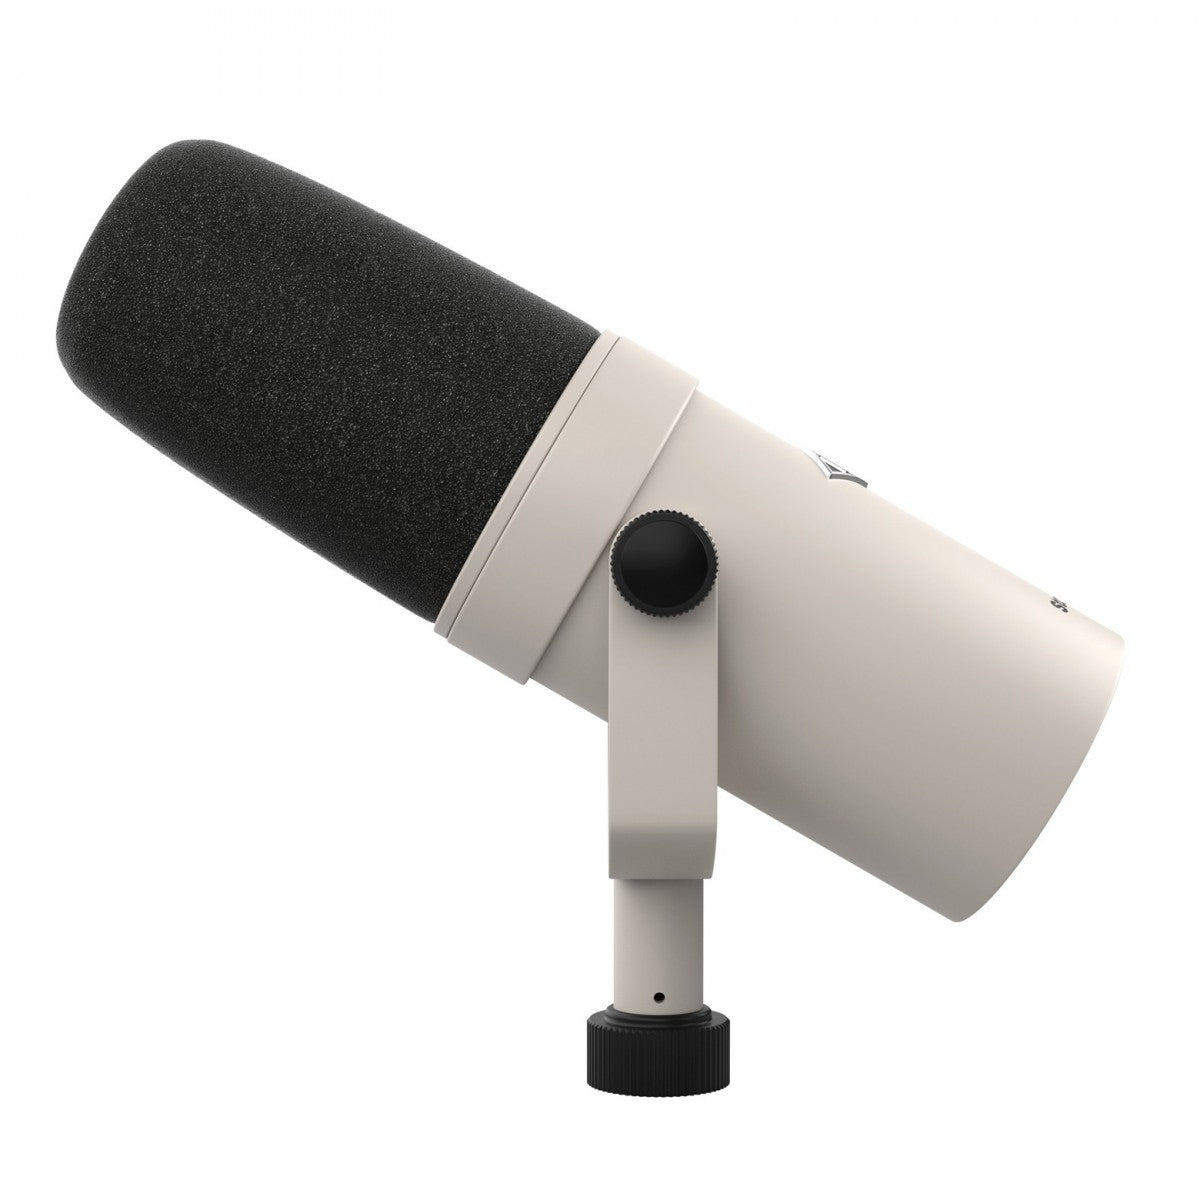 Universal Audio SD-1 Dynamic Microphone